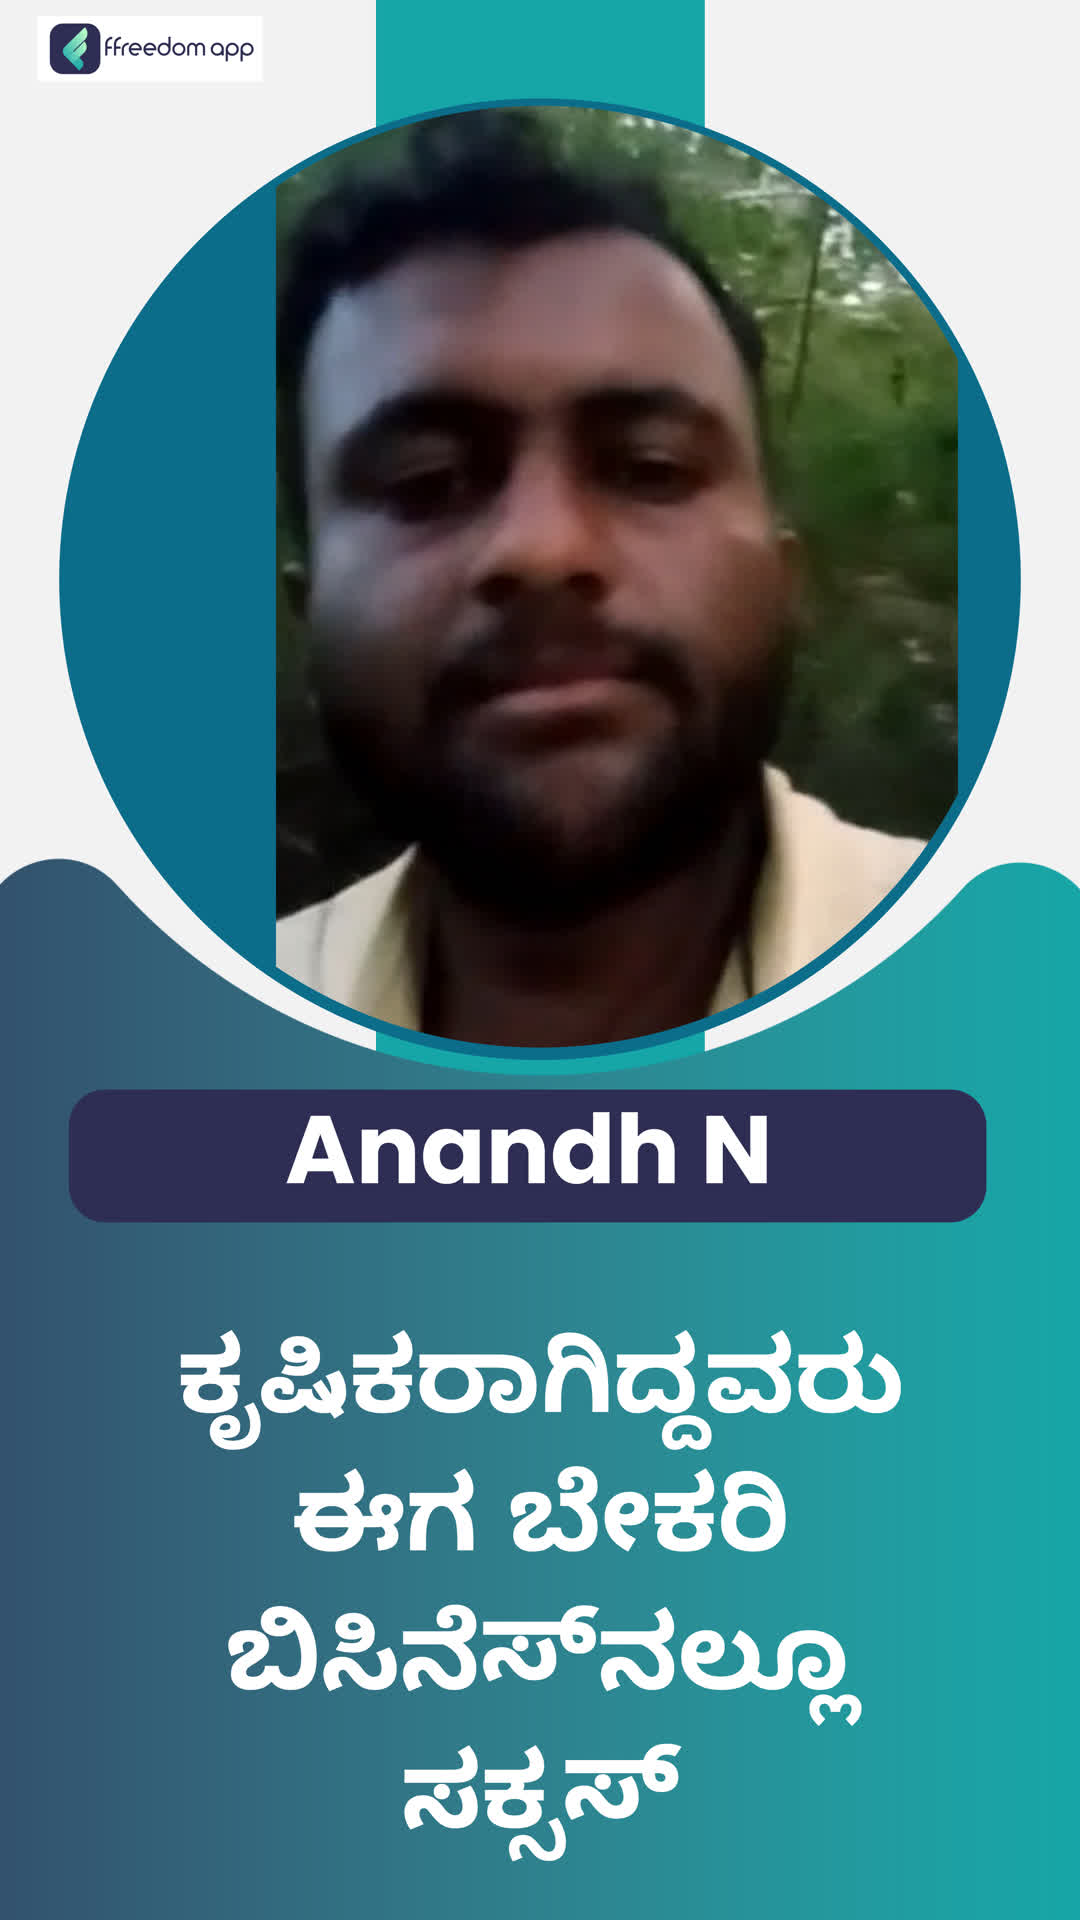 Anandhan .M's Honest Review of ffreedom app - Thanjavur ,Tamil Nadu